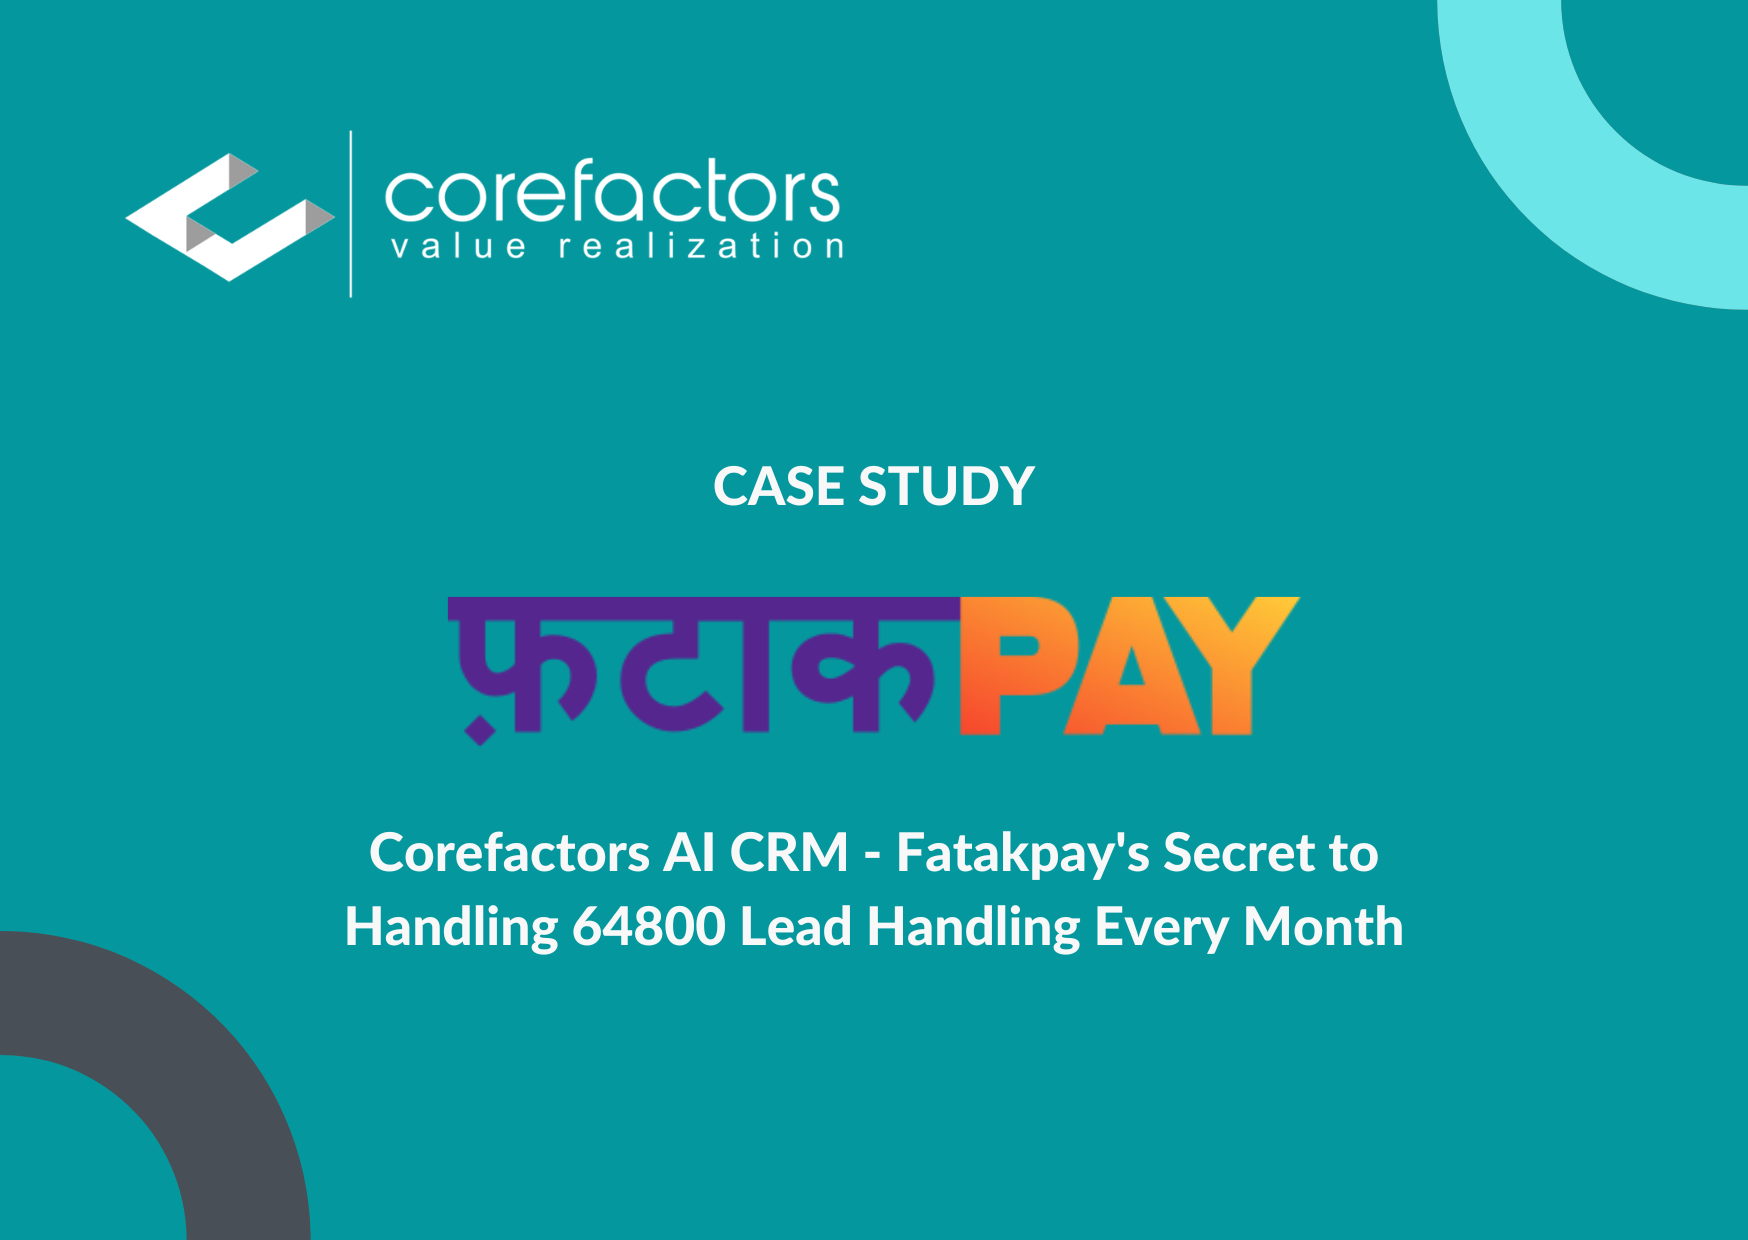 Corefactors AI CRM - Fatakpay's Secret to Handling 64800 Lead Handling Every Month